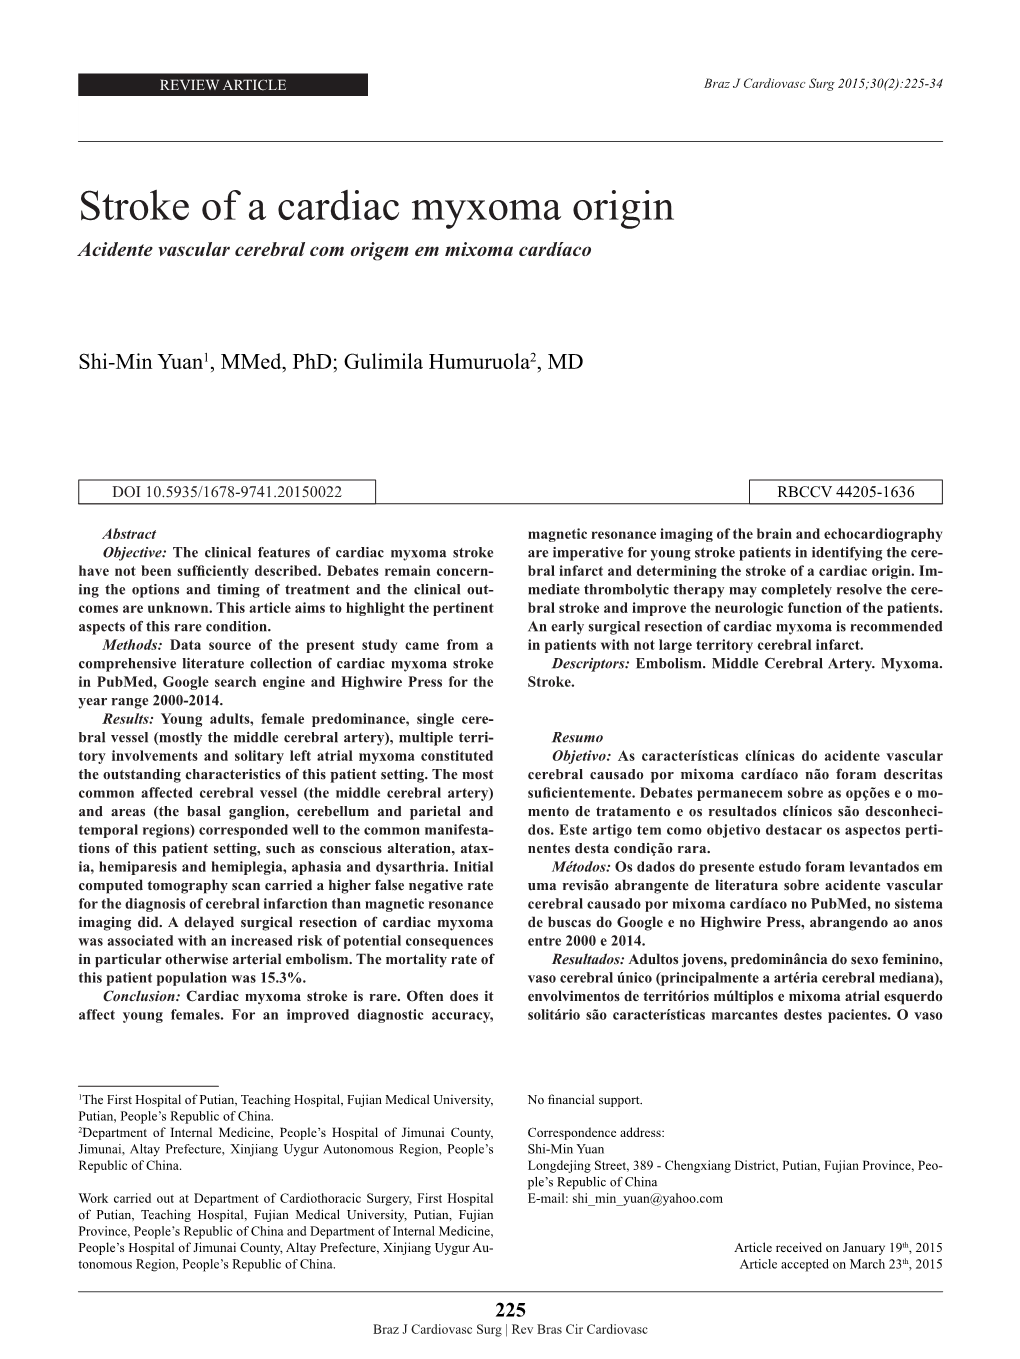 Stroke of a Cardiac Myxoma Origin Braz J Cardiovasc Surg 2015;30(2):225-34